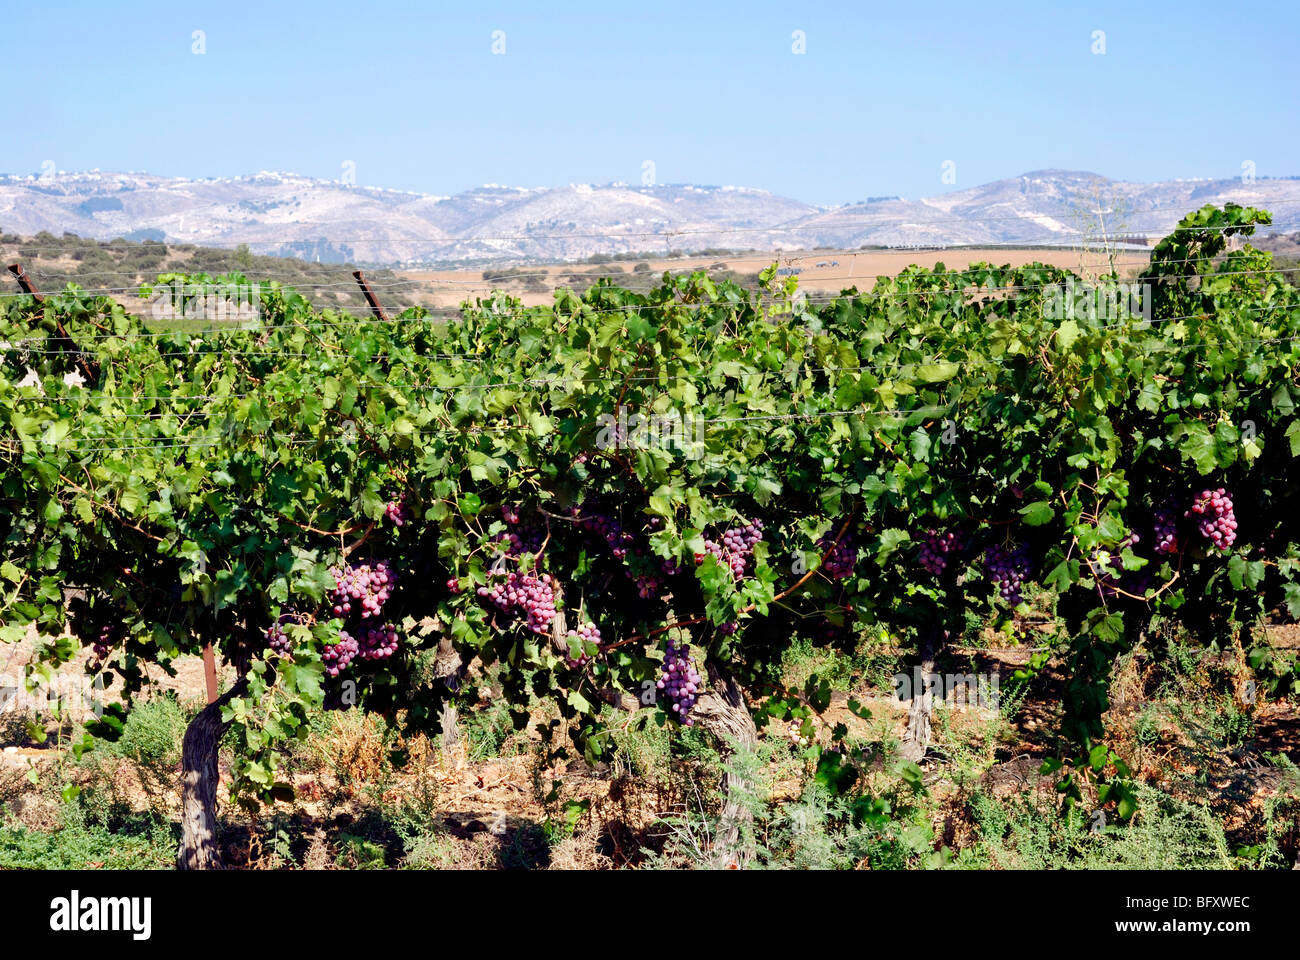 Israel, Negev, Lachish Region, Vineyard, Stock Photo